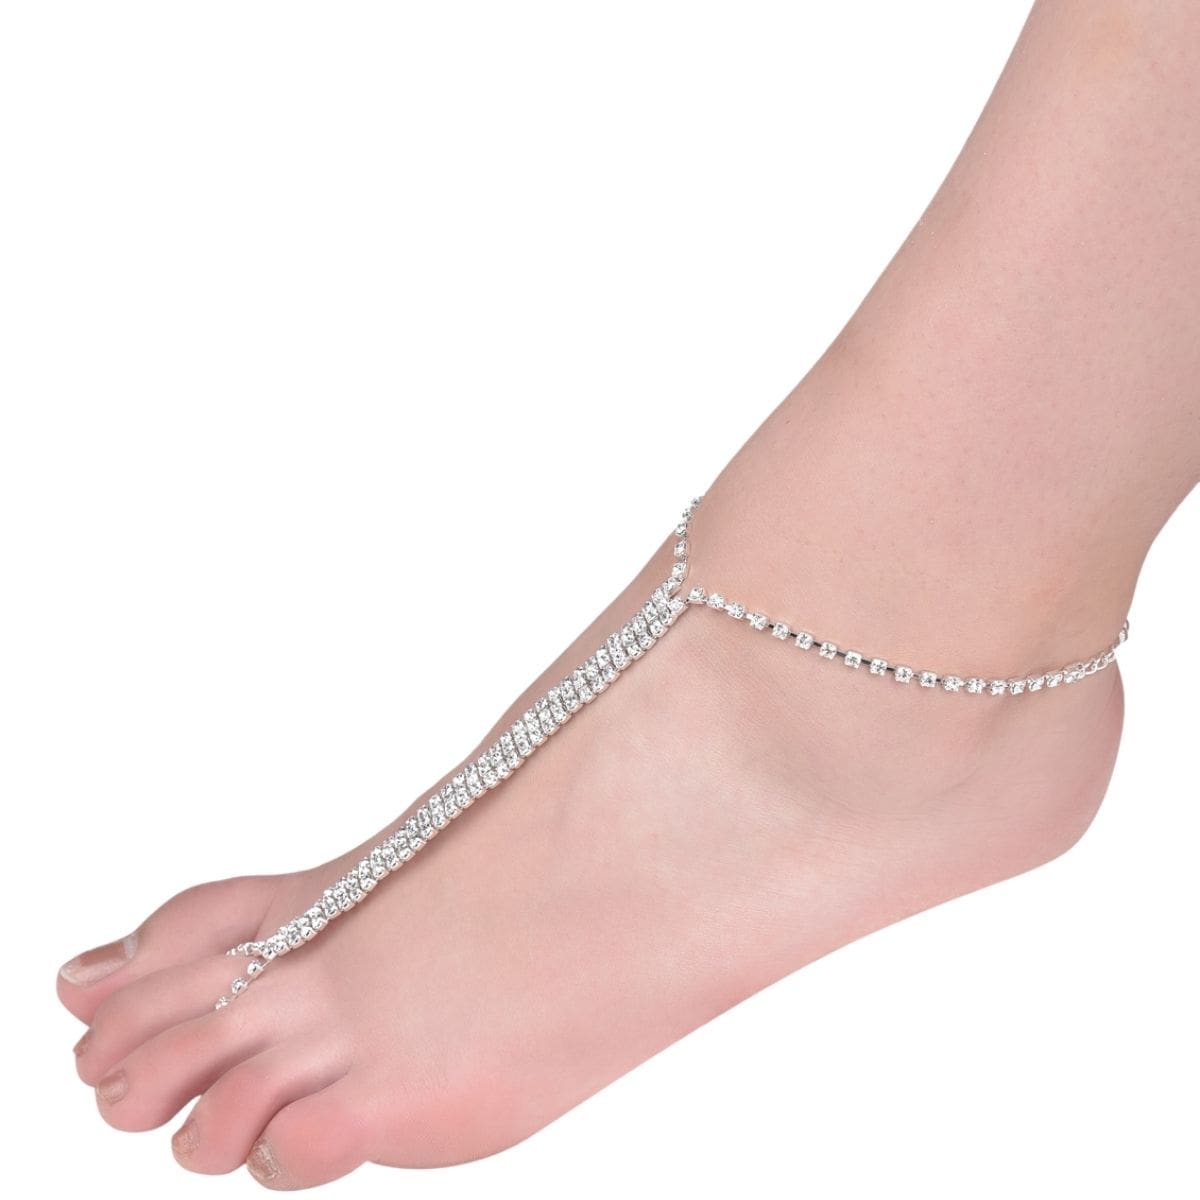 Buy Bridal Toe Ring Anklet Online at Affordable Prices